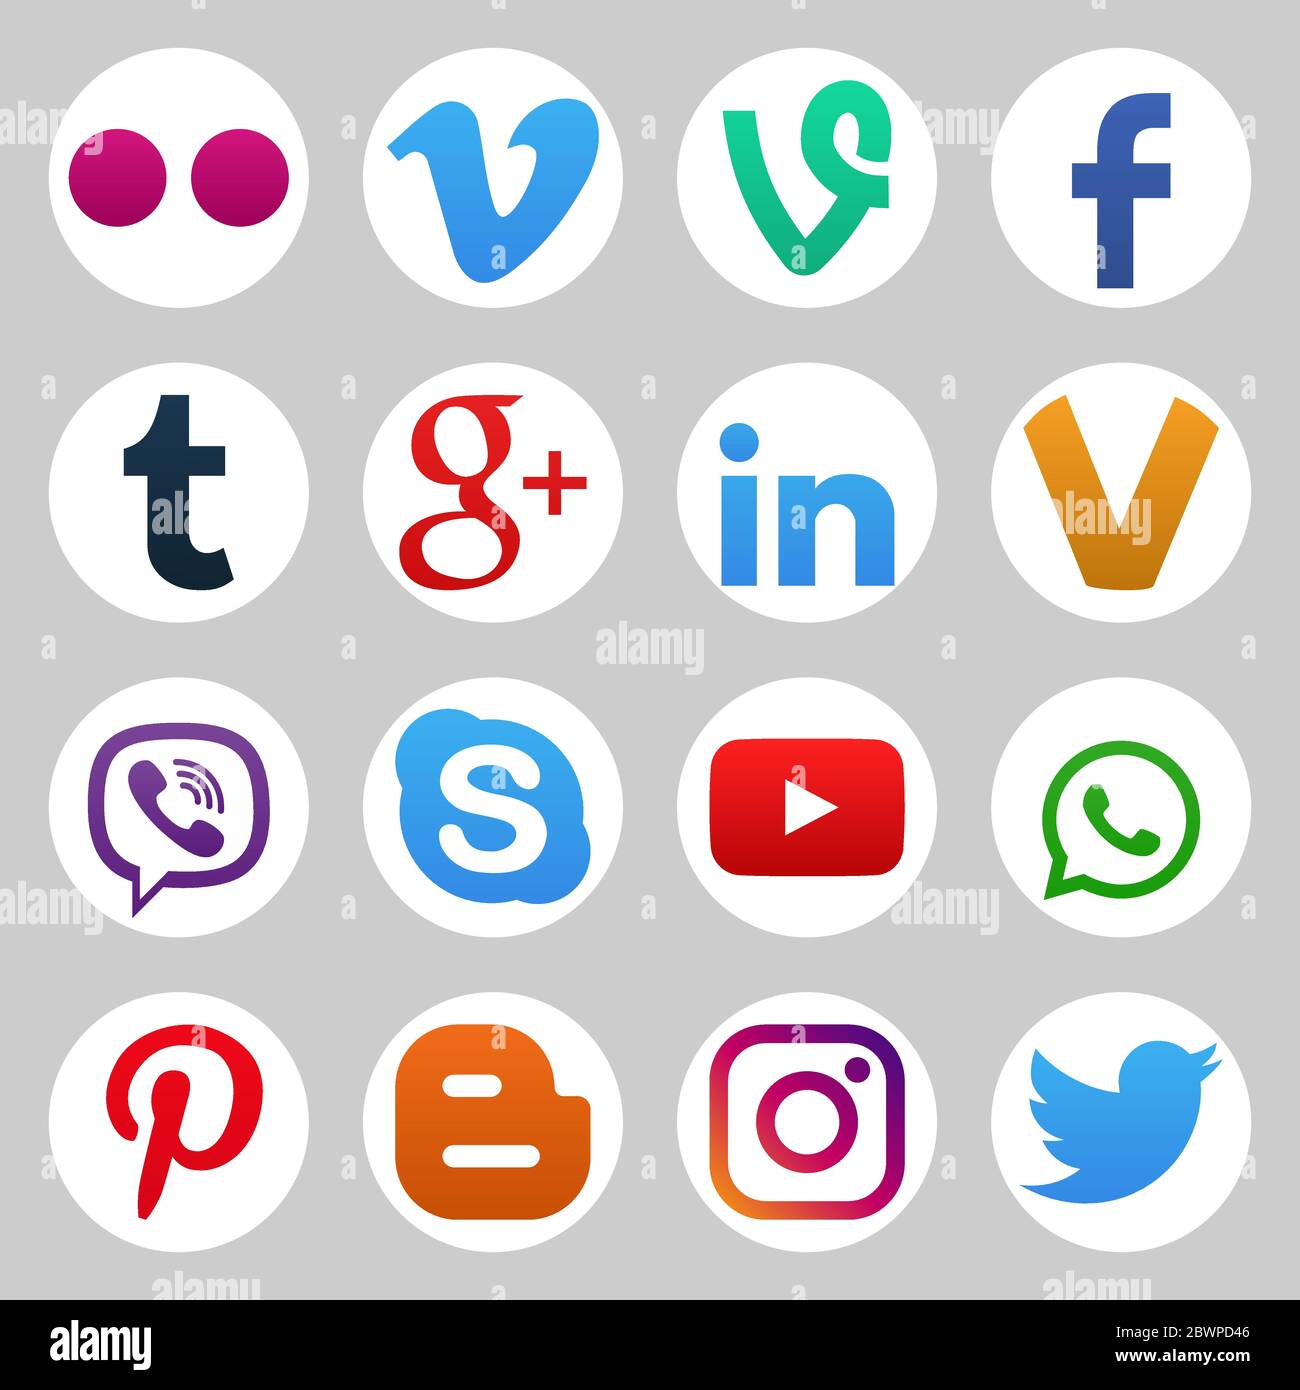 VORONEZH, RUSSIA - JANUARY 05, 2020: Set of color popular social media icons: youtube, instagram, twitter, facebook, whatsapp, pinterest, snapchat, vi Stock Vector